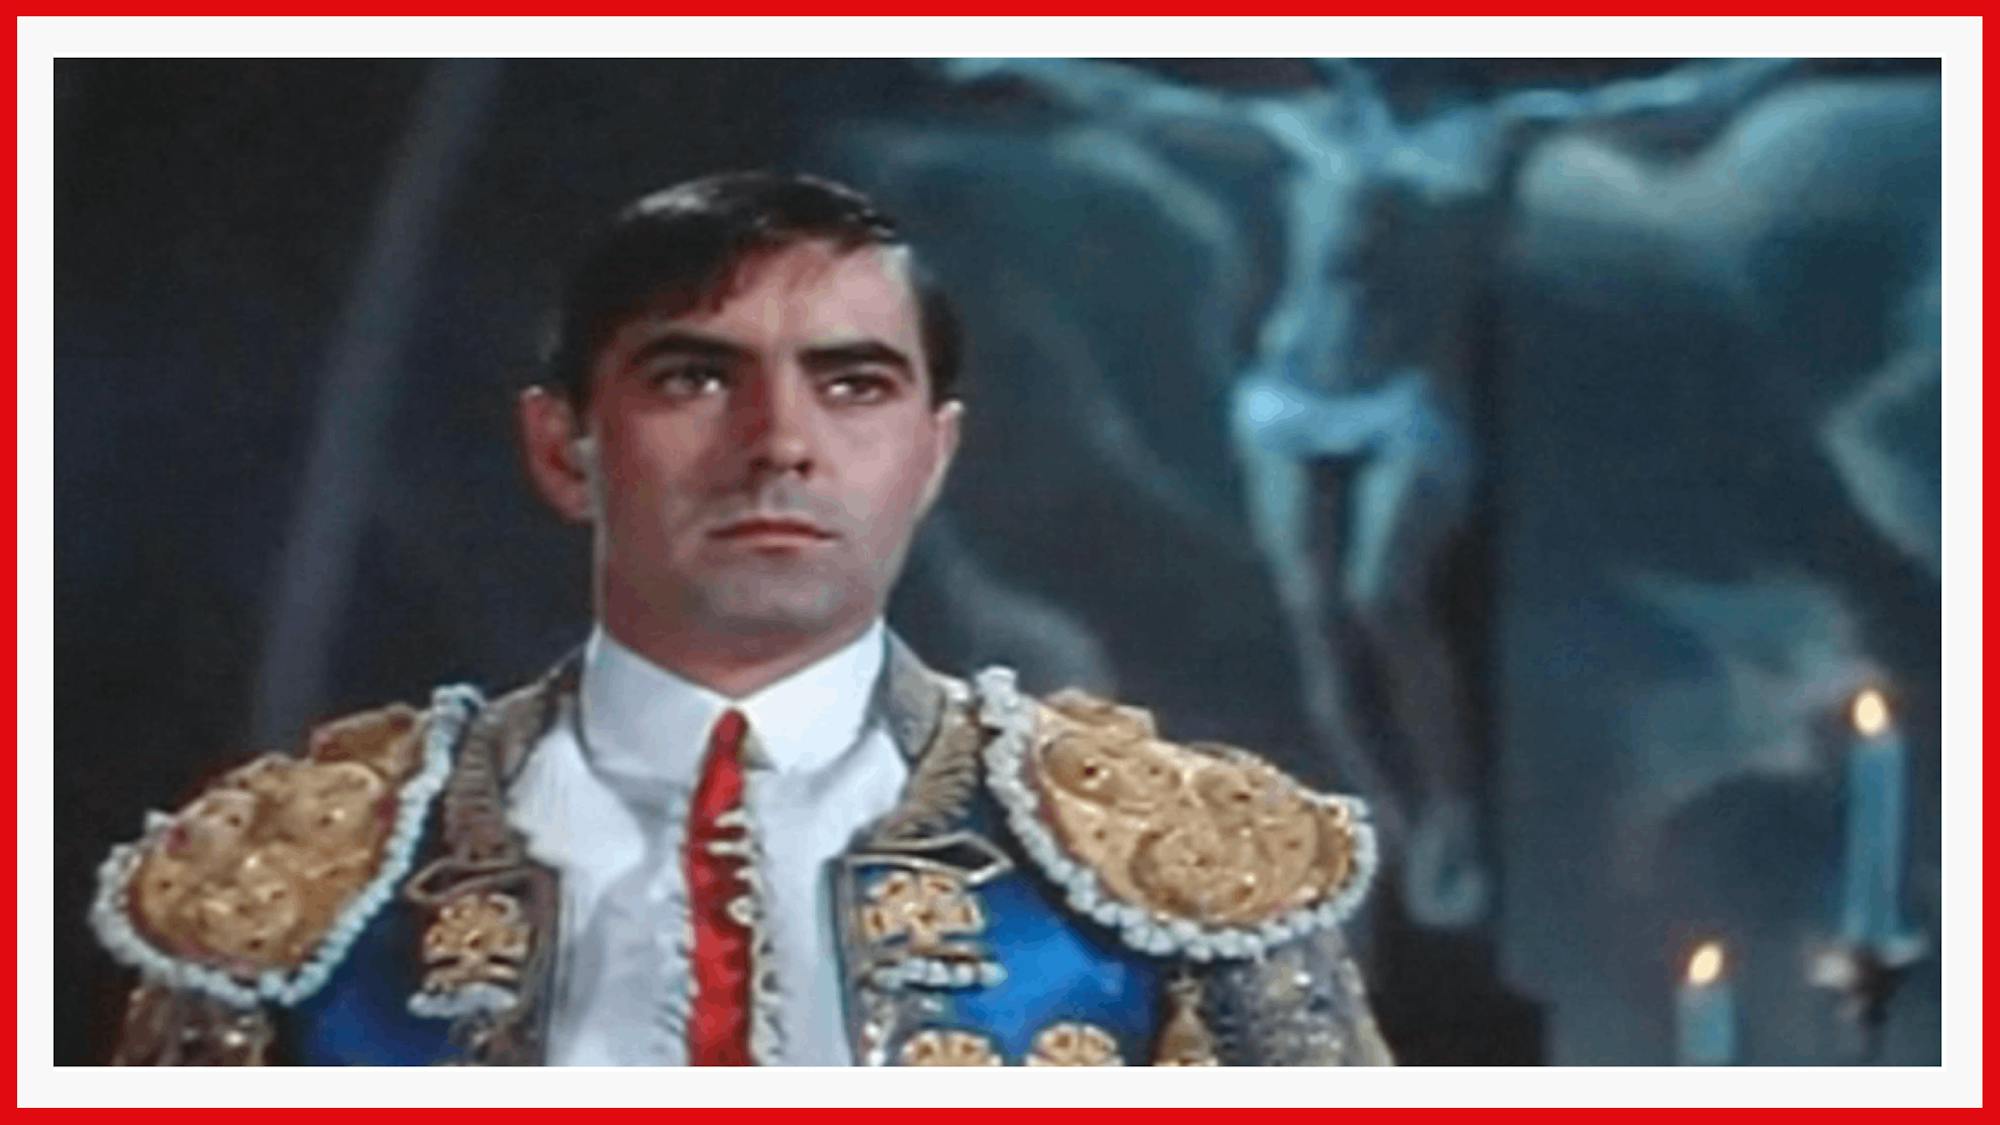 Power as Juan Gallardo, gallant in his blue and gold bullfighting costume